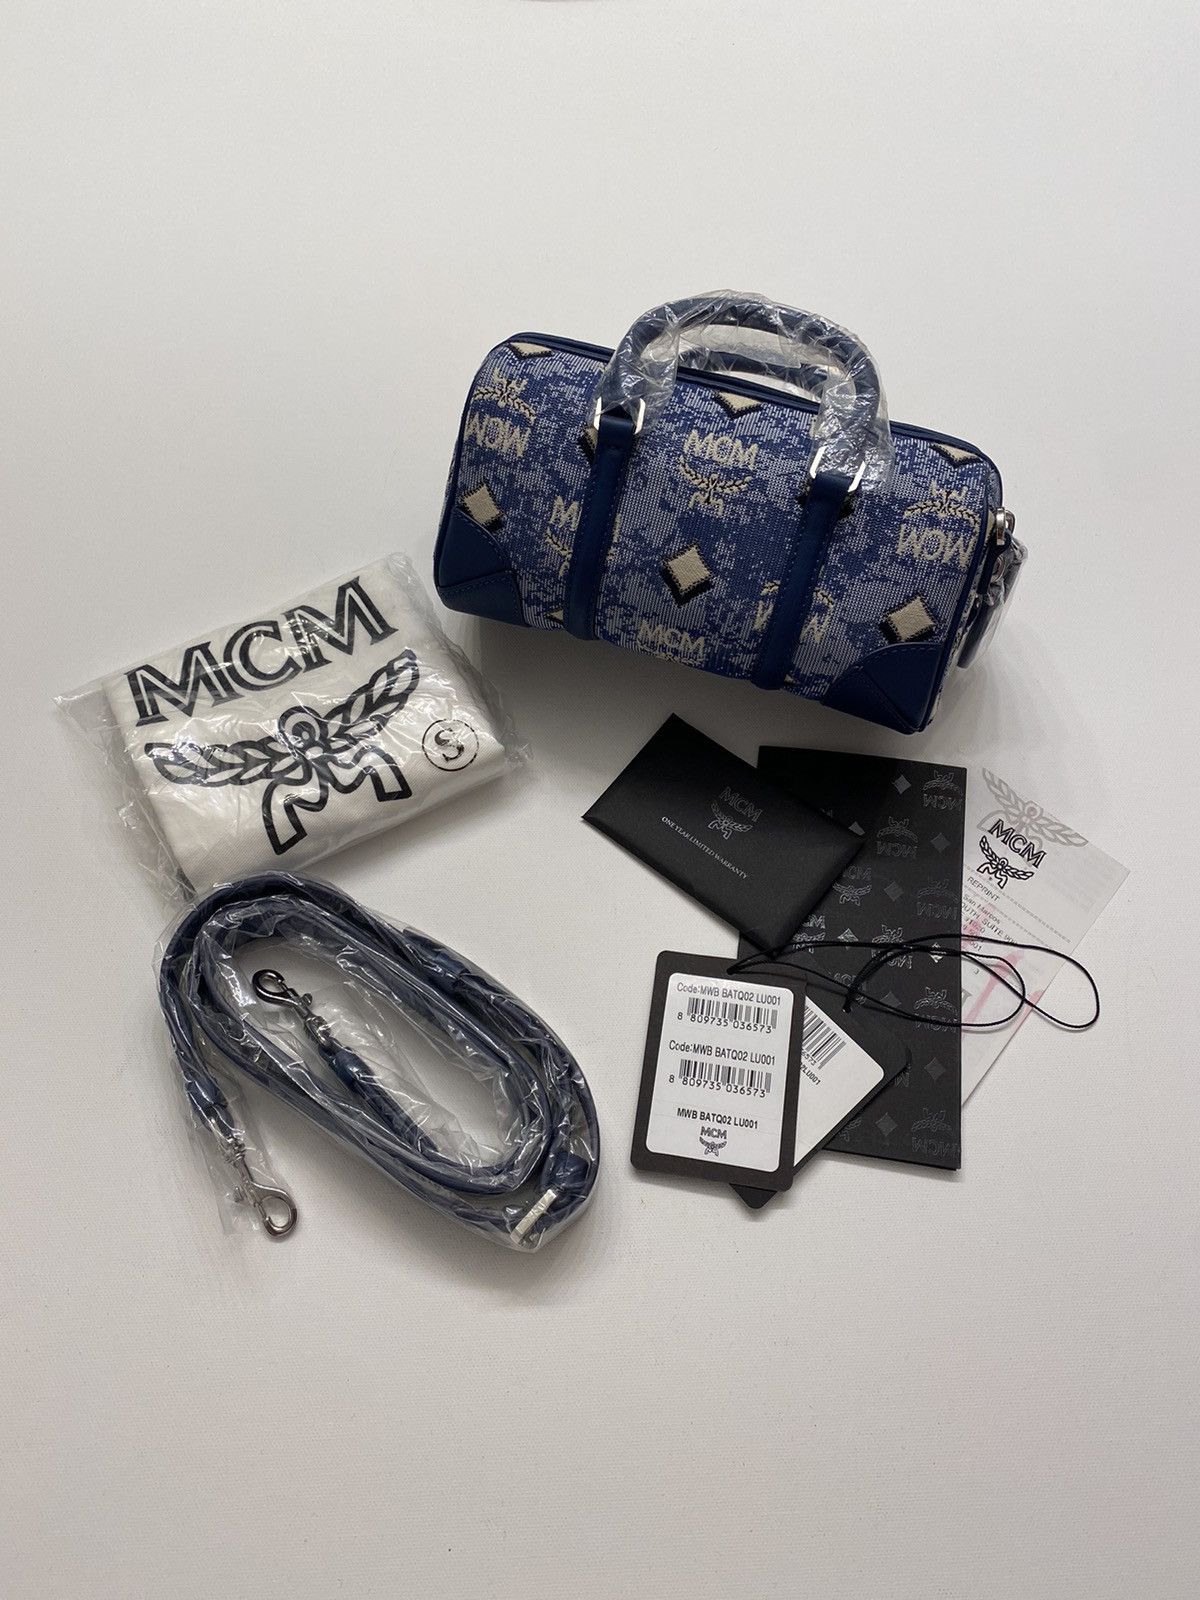 Mcm Stark Small Blue Vintage Jacquard Monogram Logo Fabric Backpack